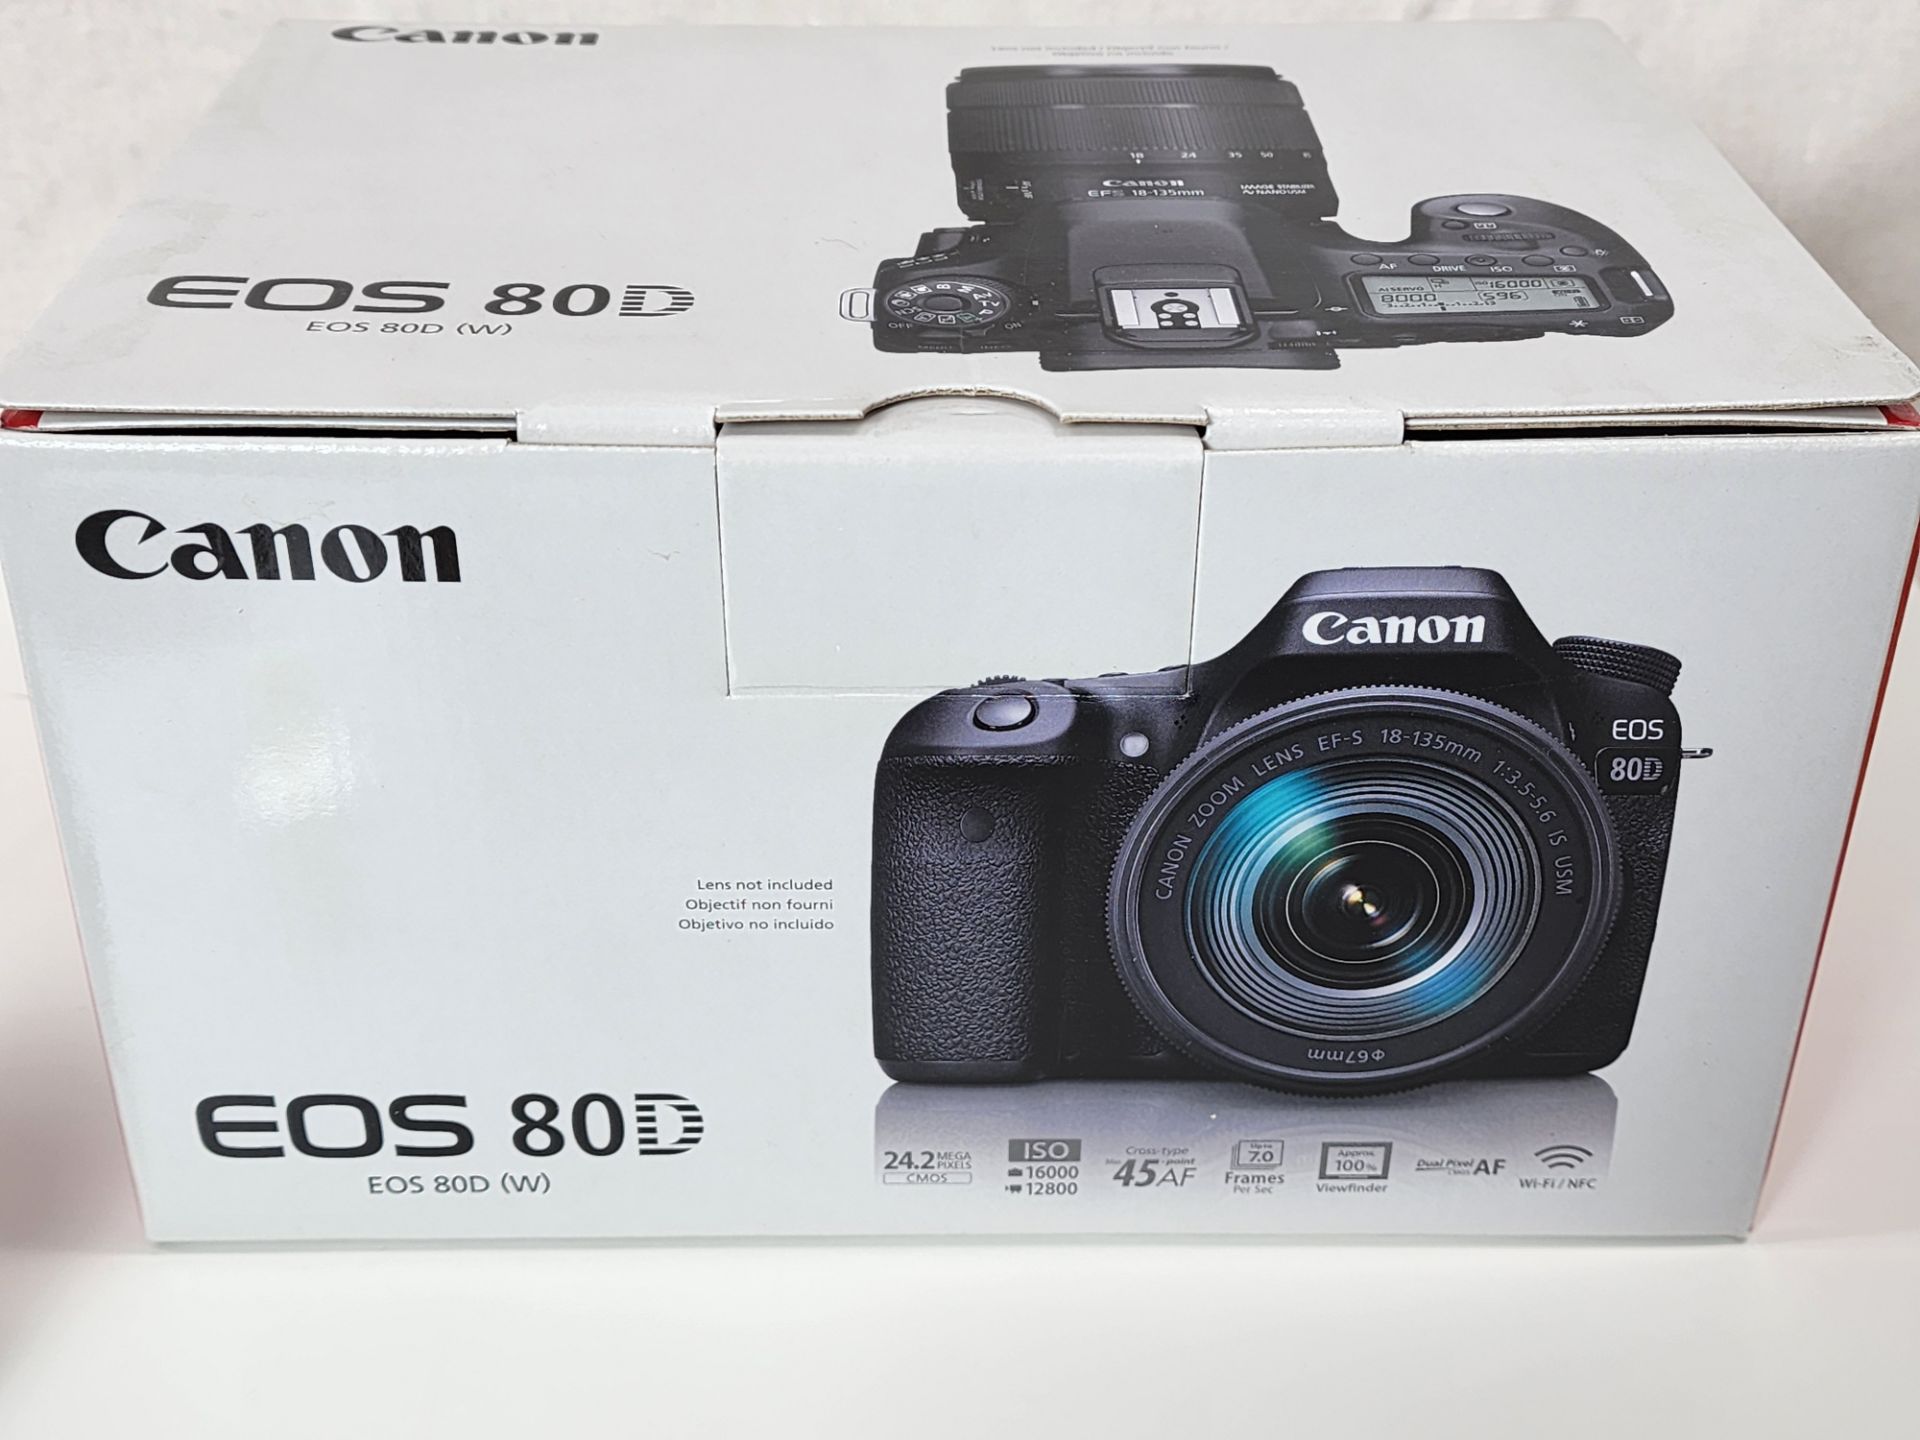 Canon Model EOS 80D (W) DSLR Camera Body, 24.2 Mega Pixel, Dual Pixel CMOS AF, Cross-Type Zmac 45- - Image 7 of 14